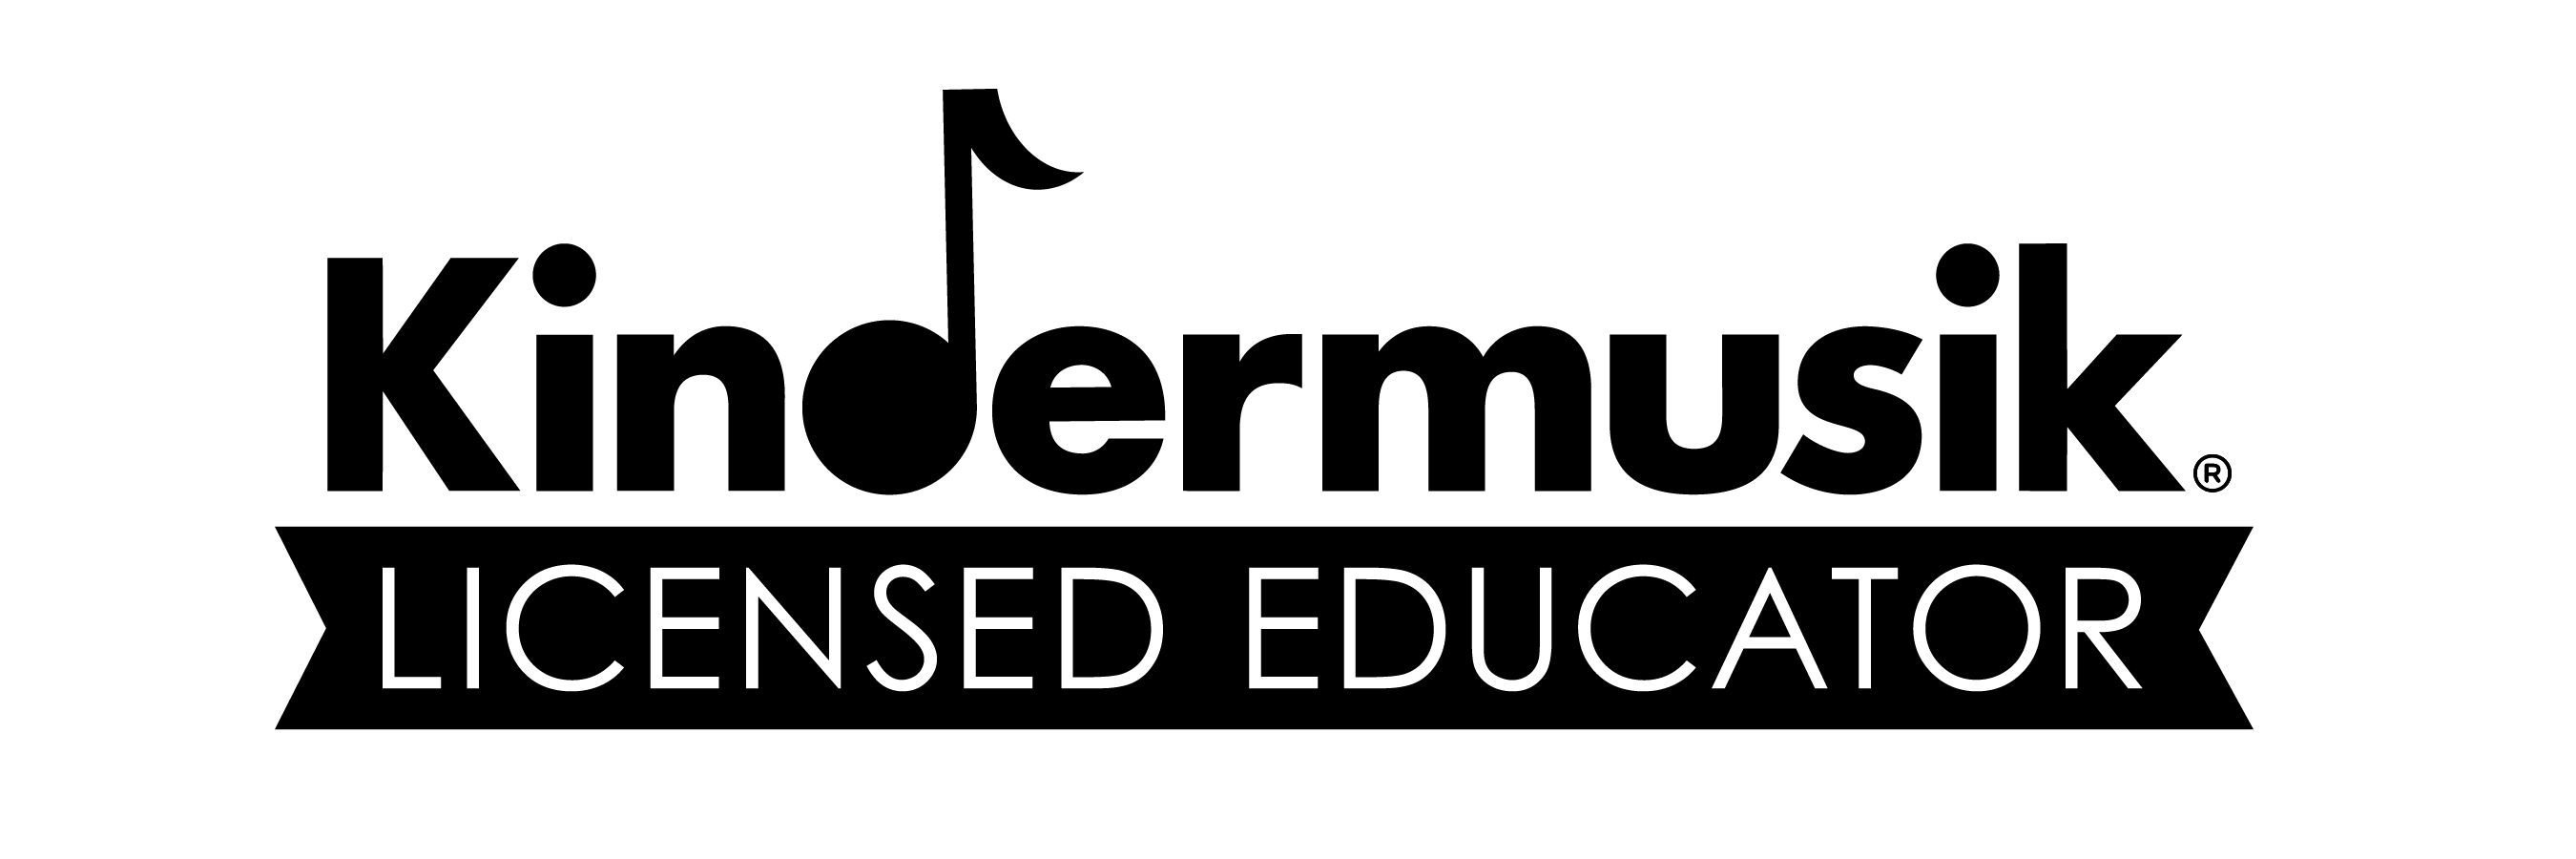 Logo-Kindermusik-Licensed-Educator-NEW-2017-Black-2700x900